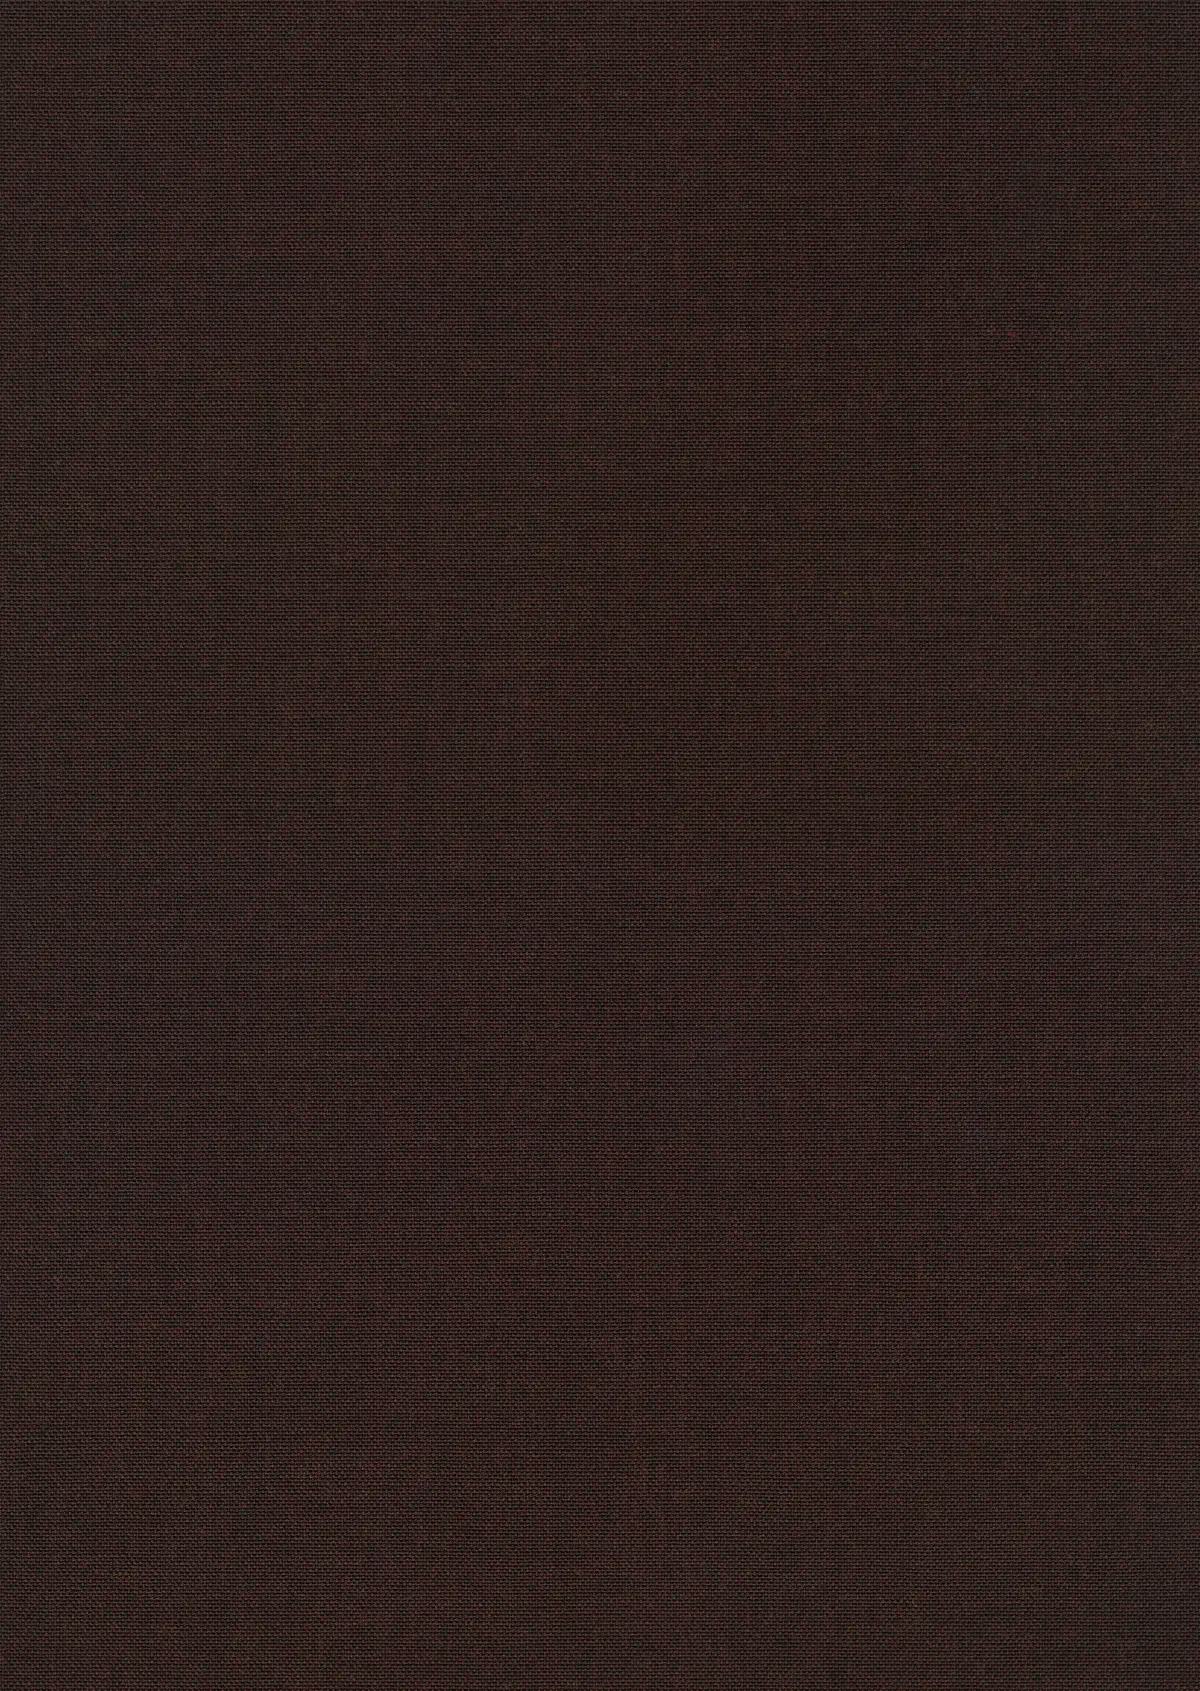 Fabric sample Remix 3 373 brown